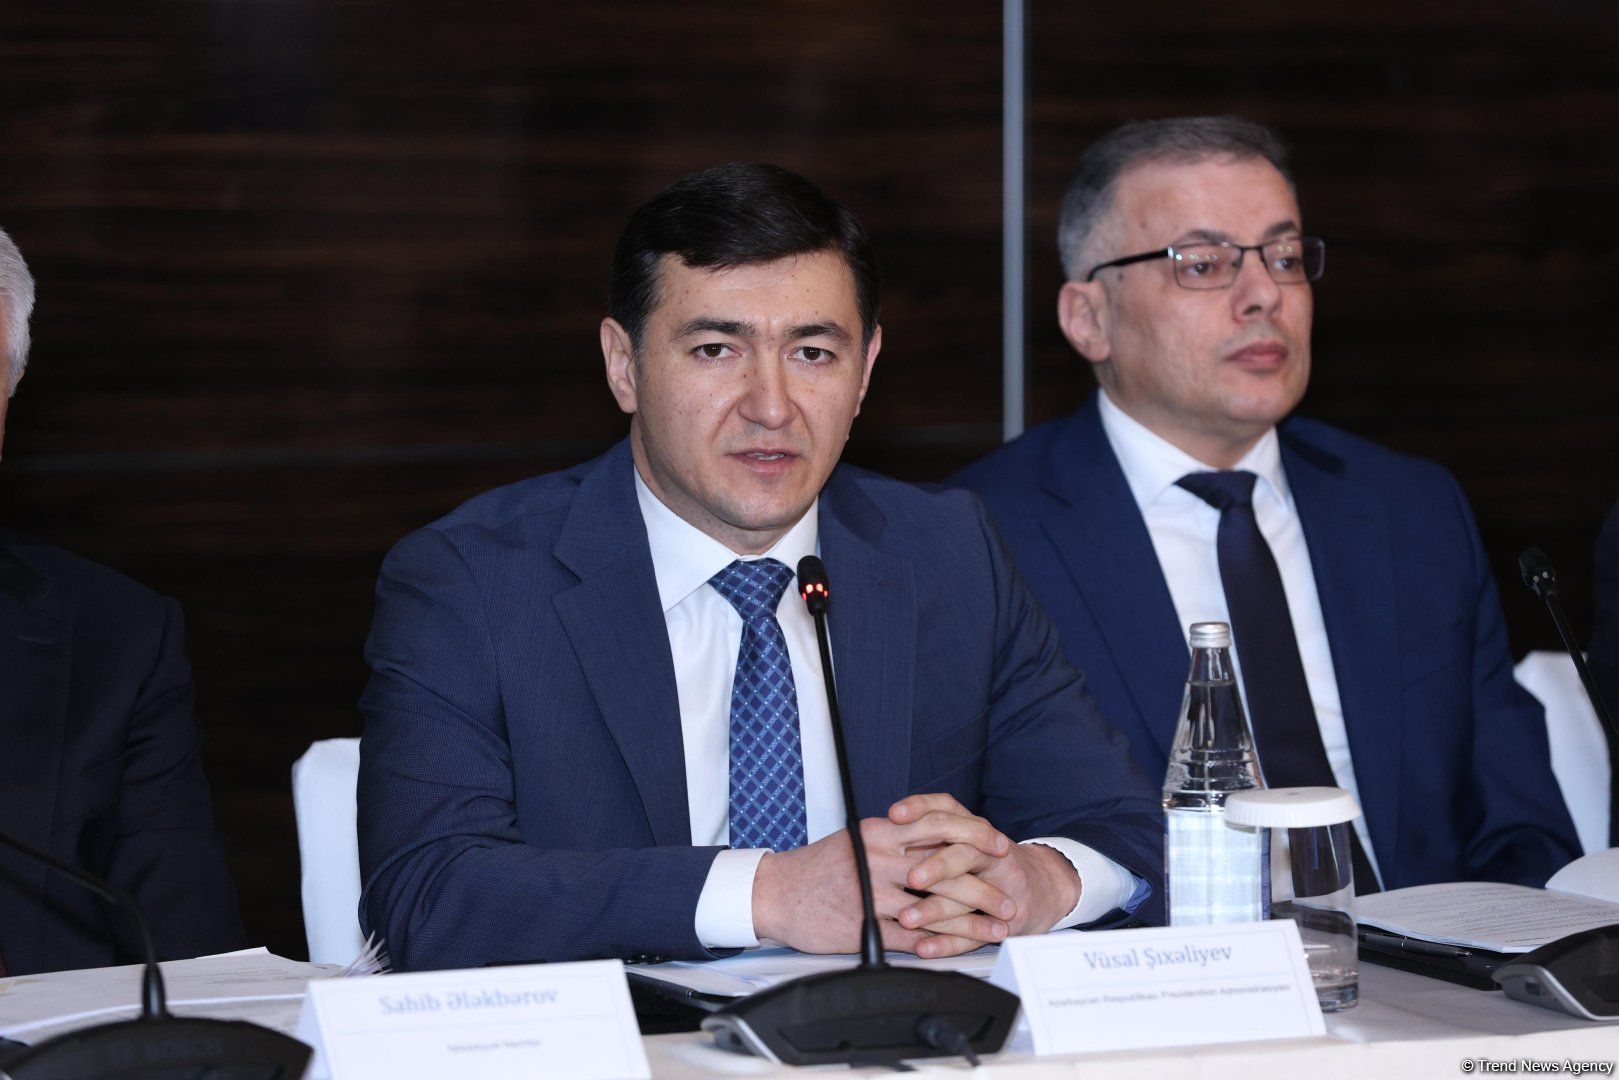 Baku hosts conference on economic reforms, modern challenges